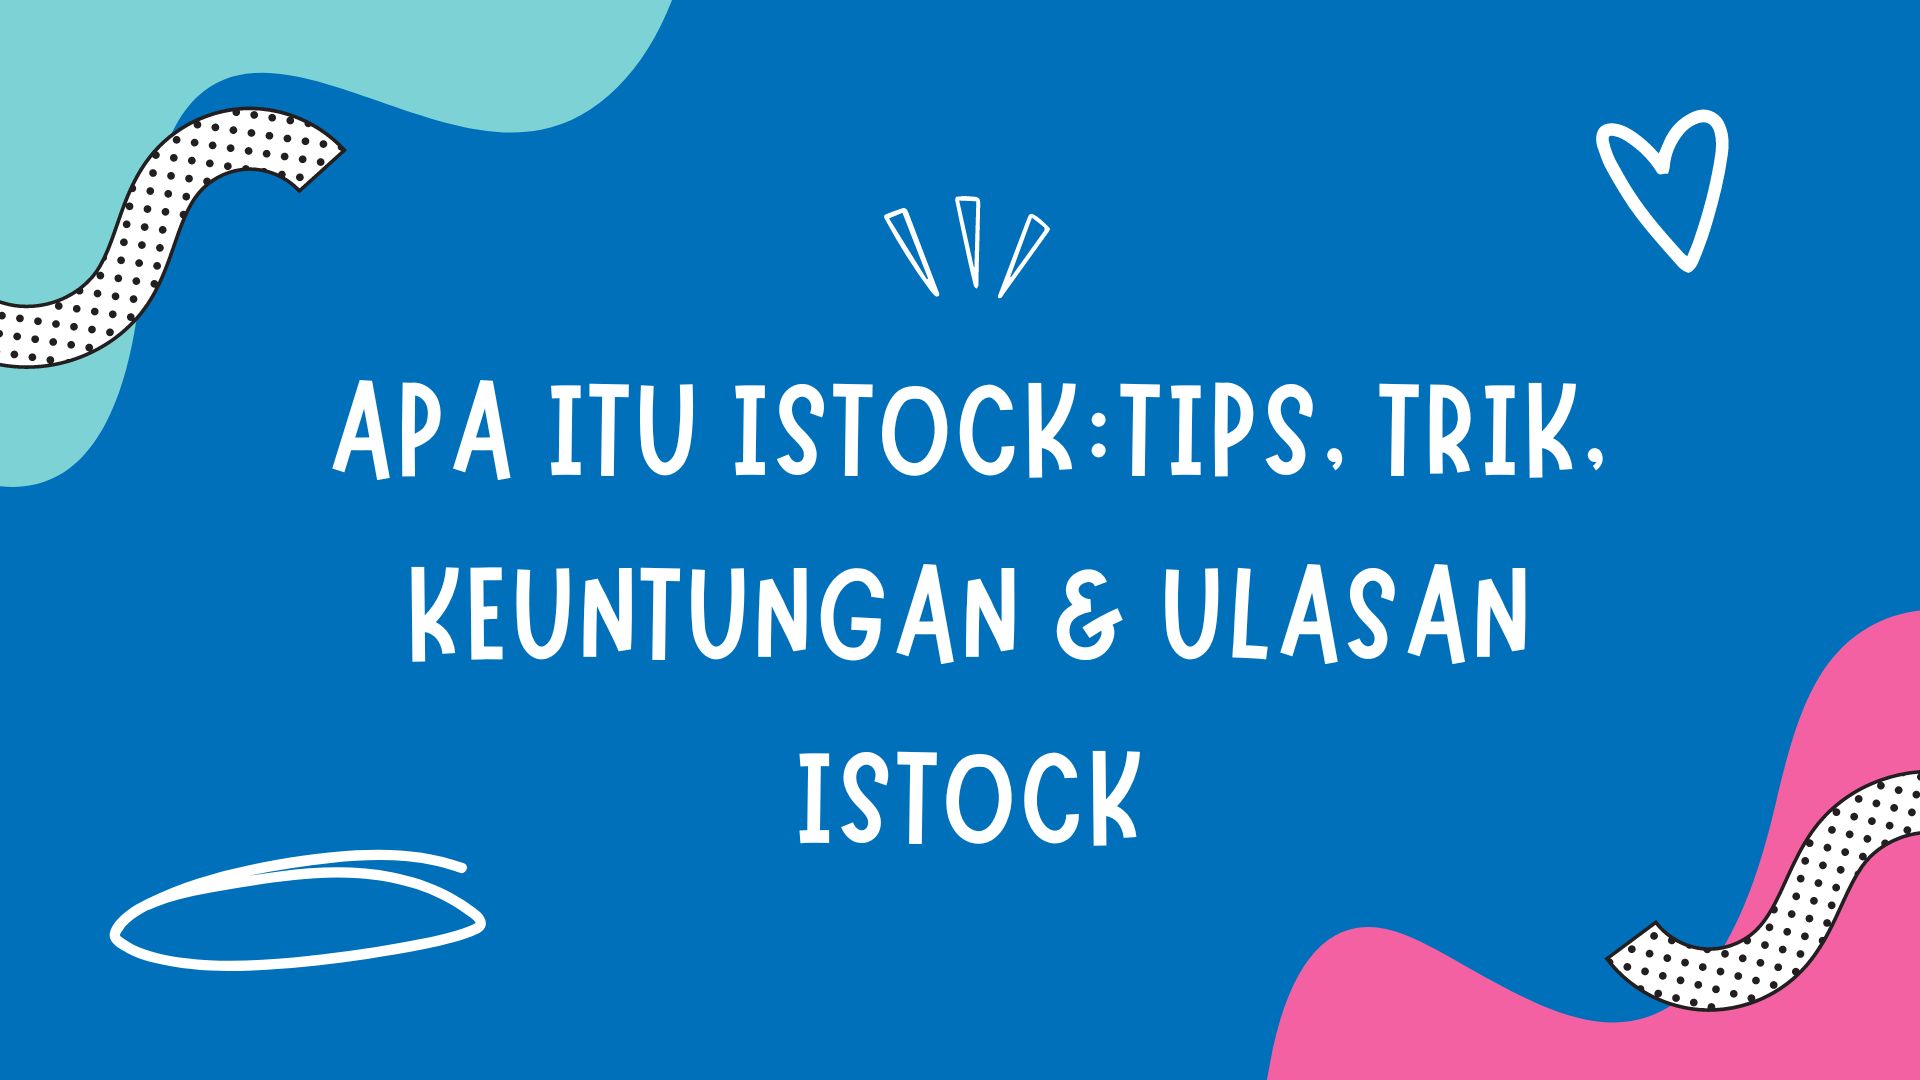 Apa itu iStock:Tips, Trik, Keuntungan & Ulasan iStock